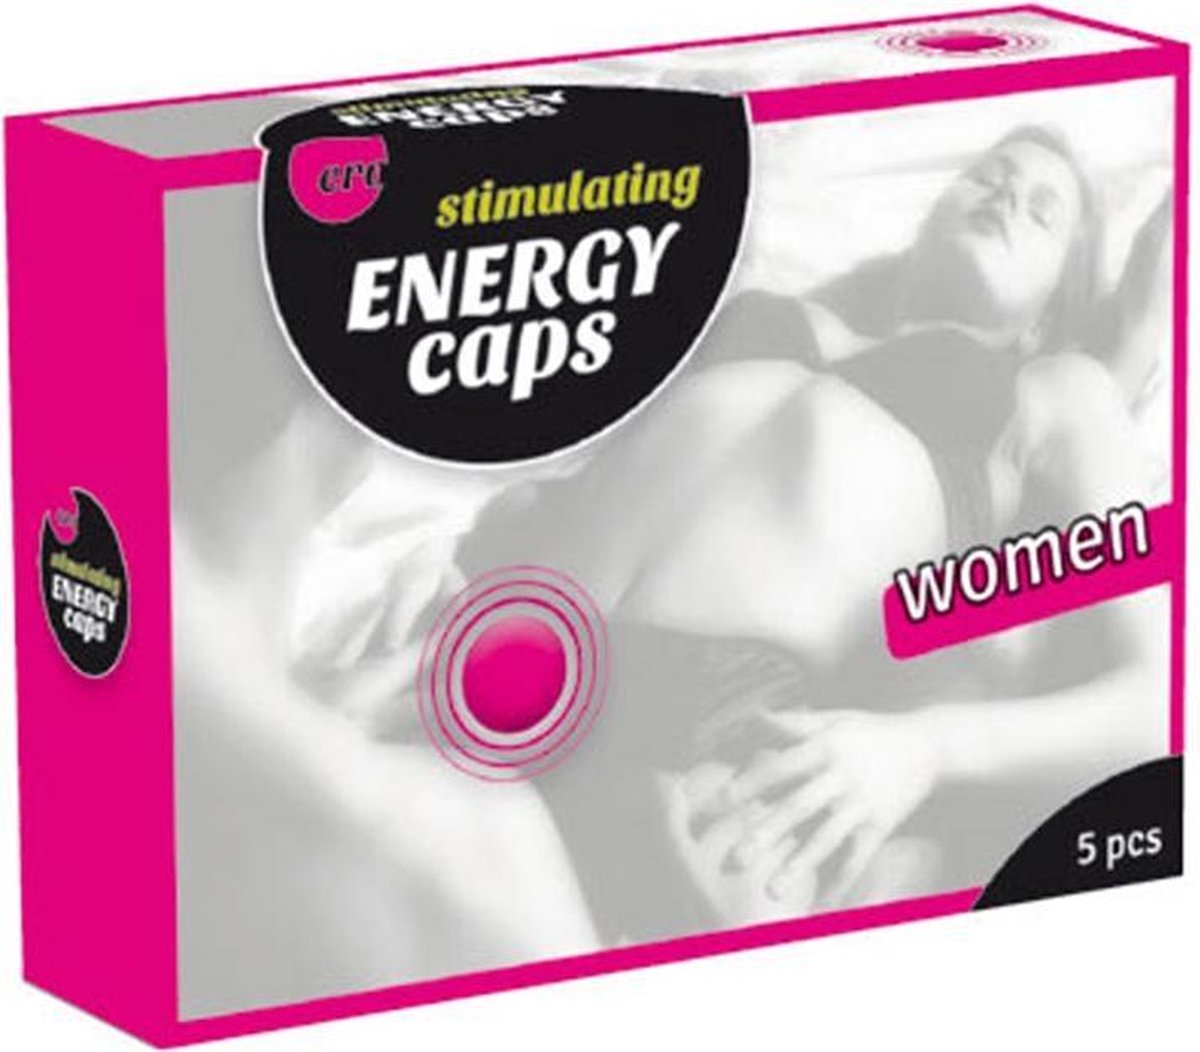 Hot Ero Stimulating Energy Caps Women